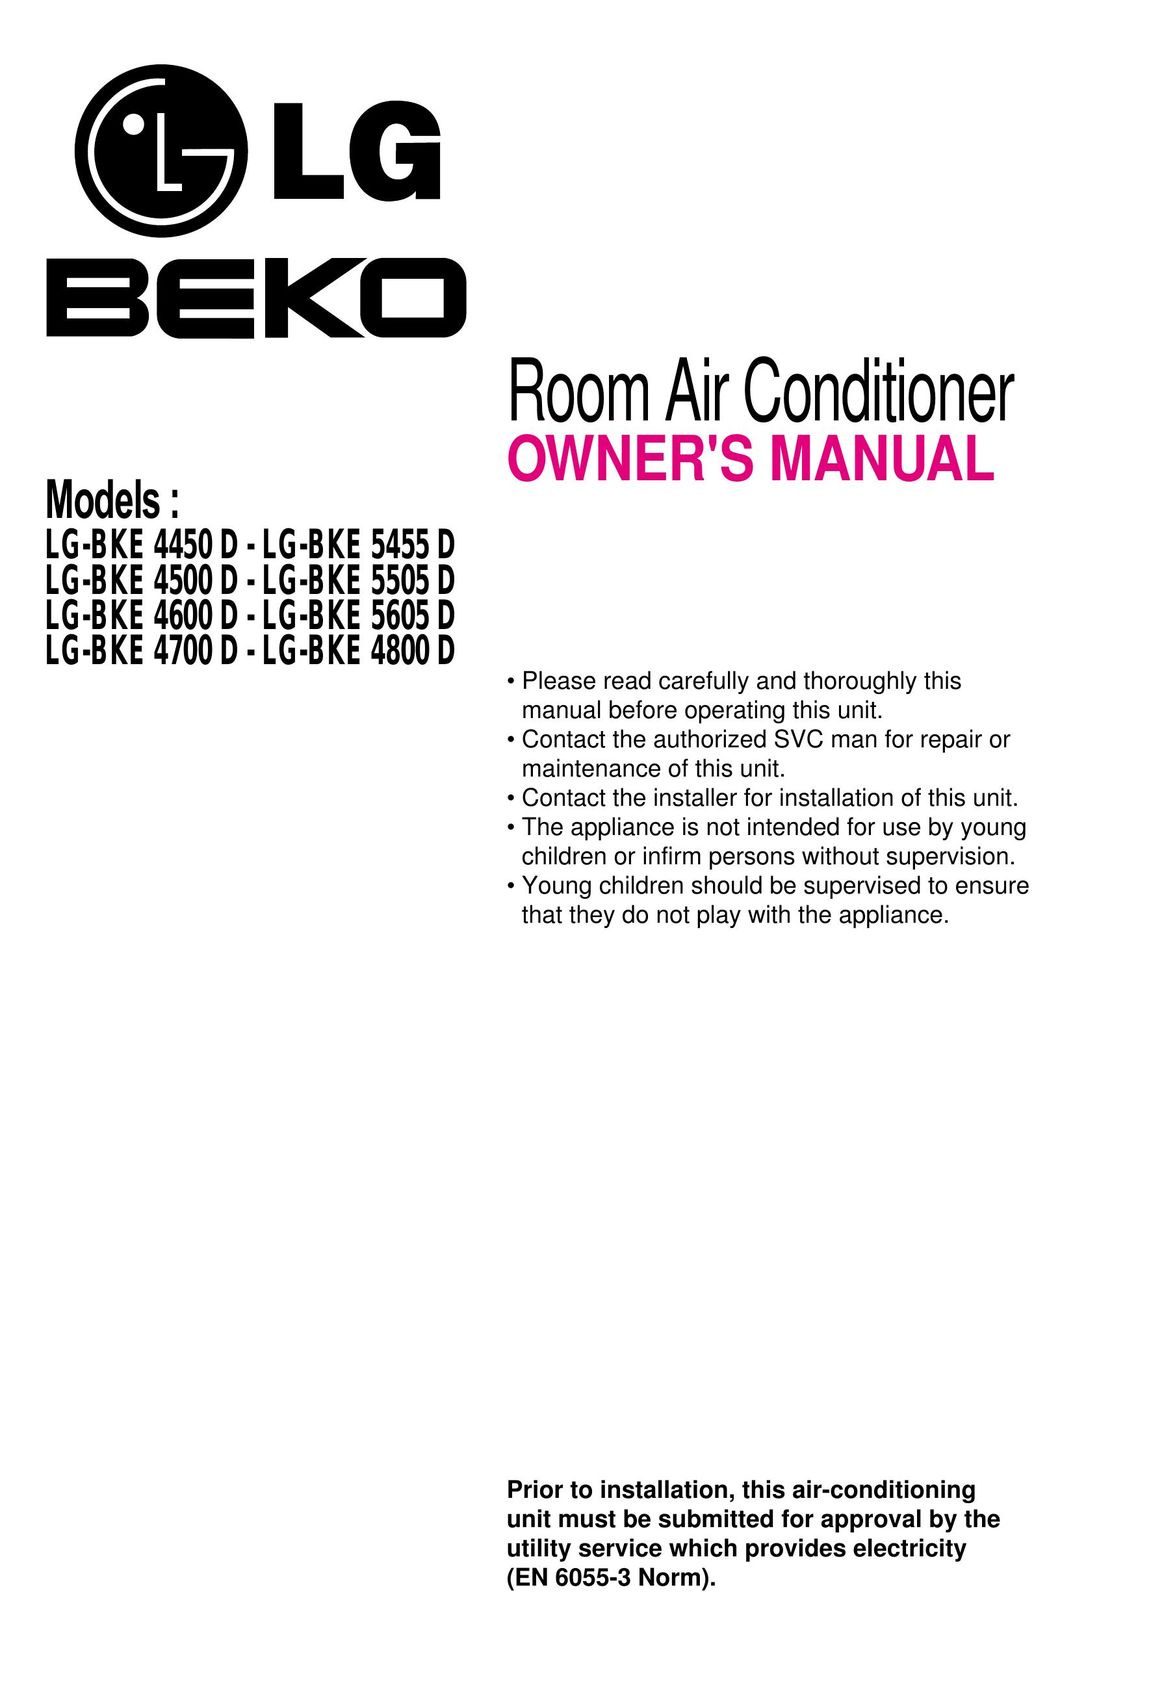 Beko LG-BKE 4700 D, LG-BKE 4800 D Air Conditioner User Manual